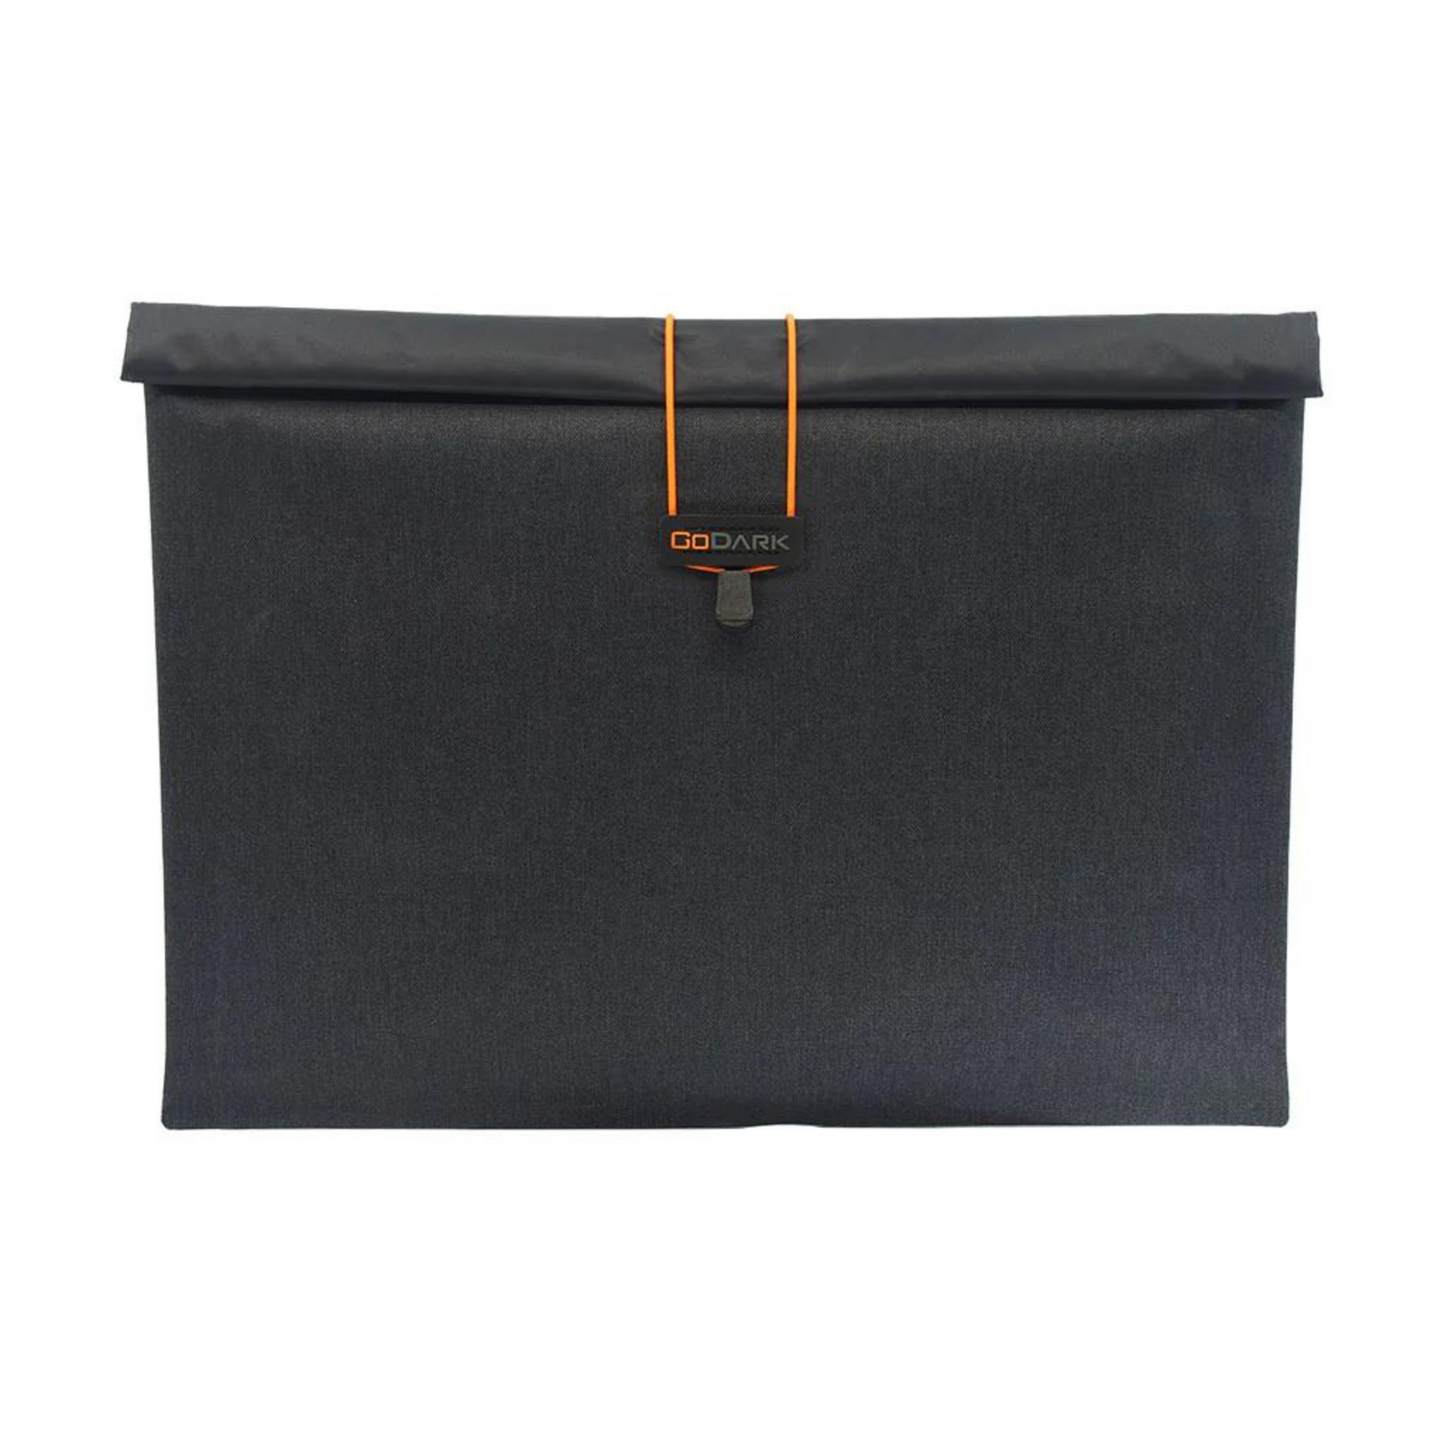 GoDark - Laptop - Faraday Bag